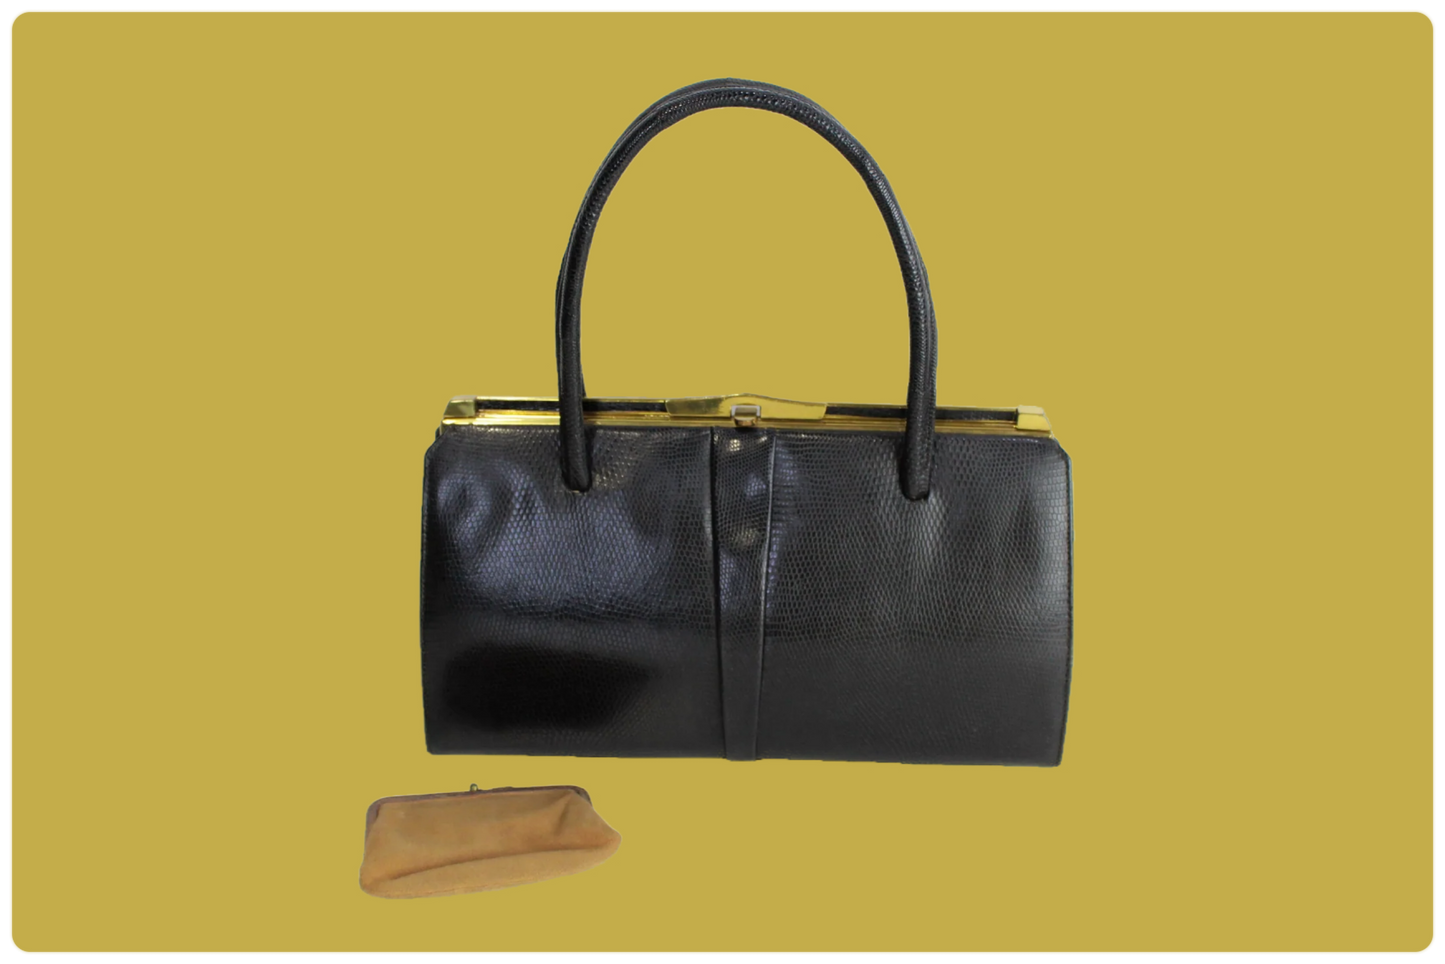 Vintage 1960s Black Leather Top Handle Purse by Simpson's